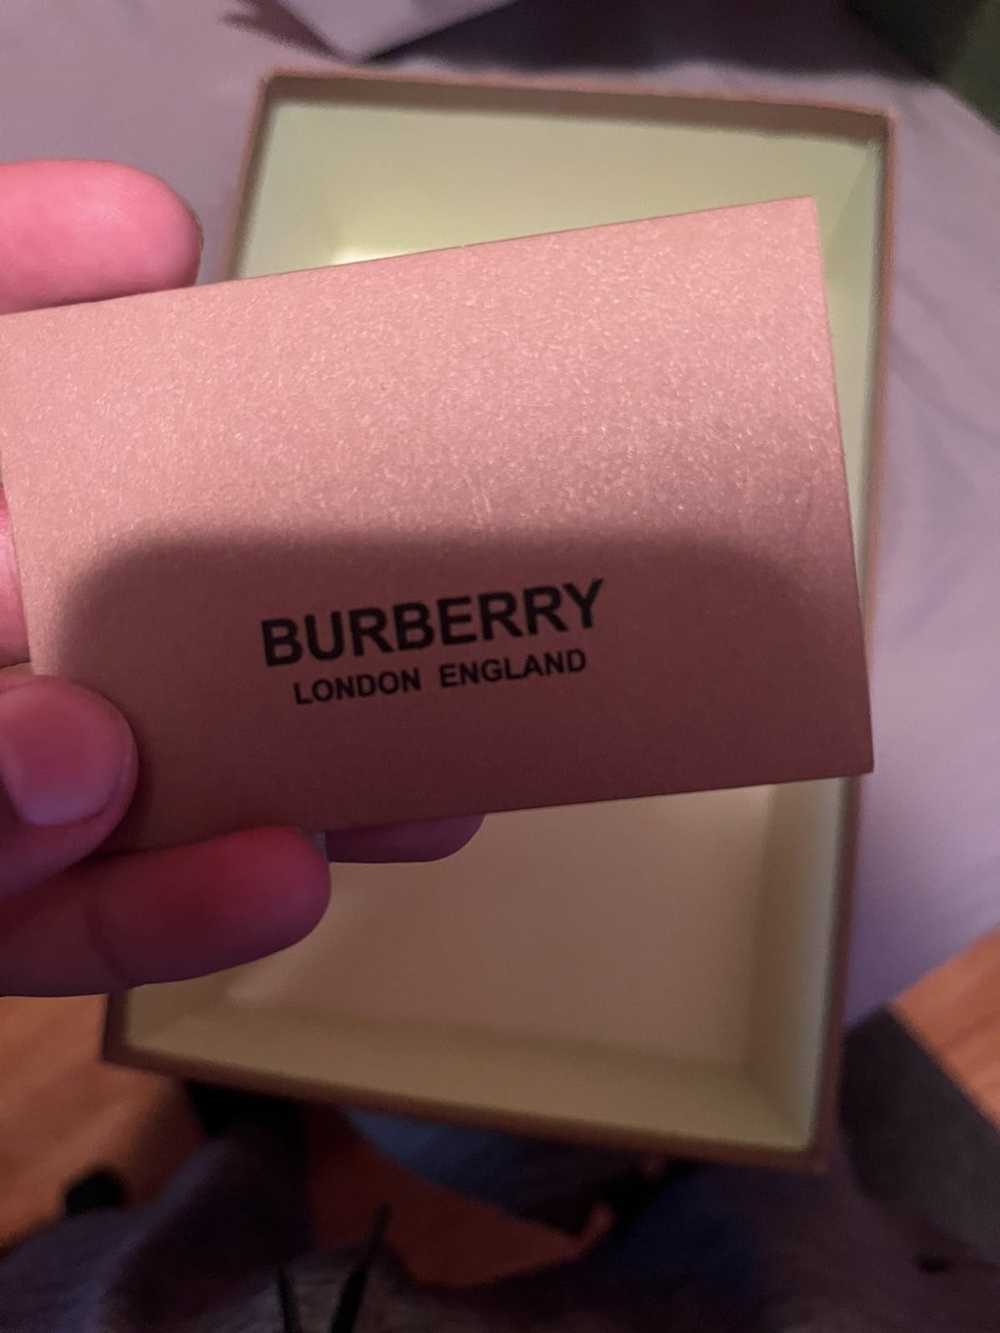 Burberry Burrberry - image 3